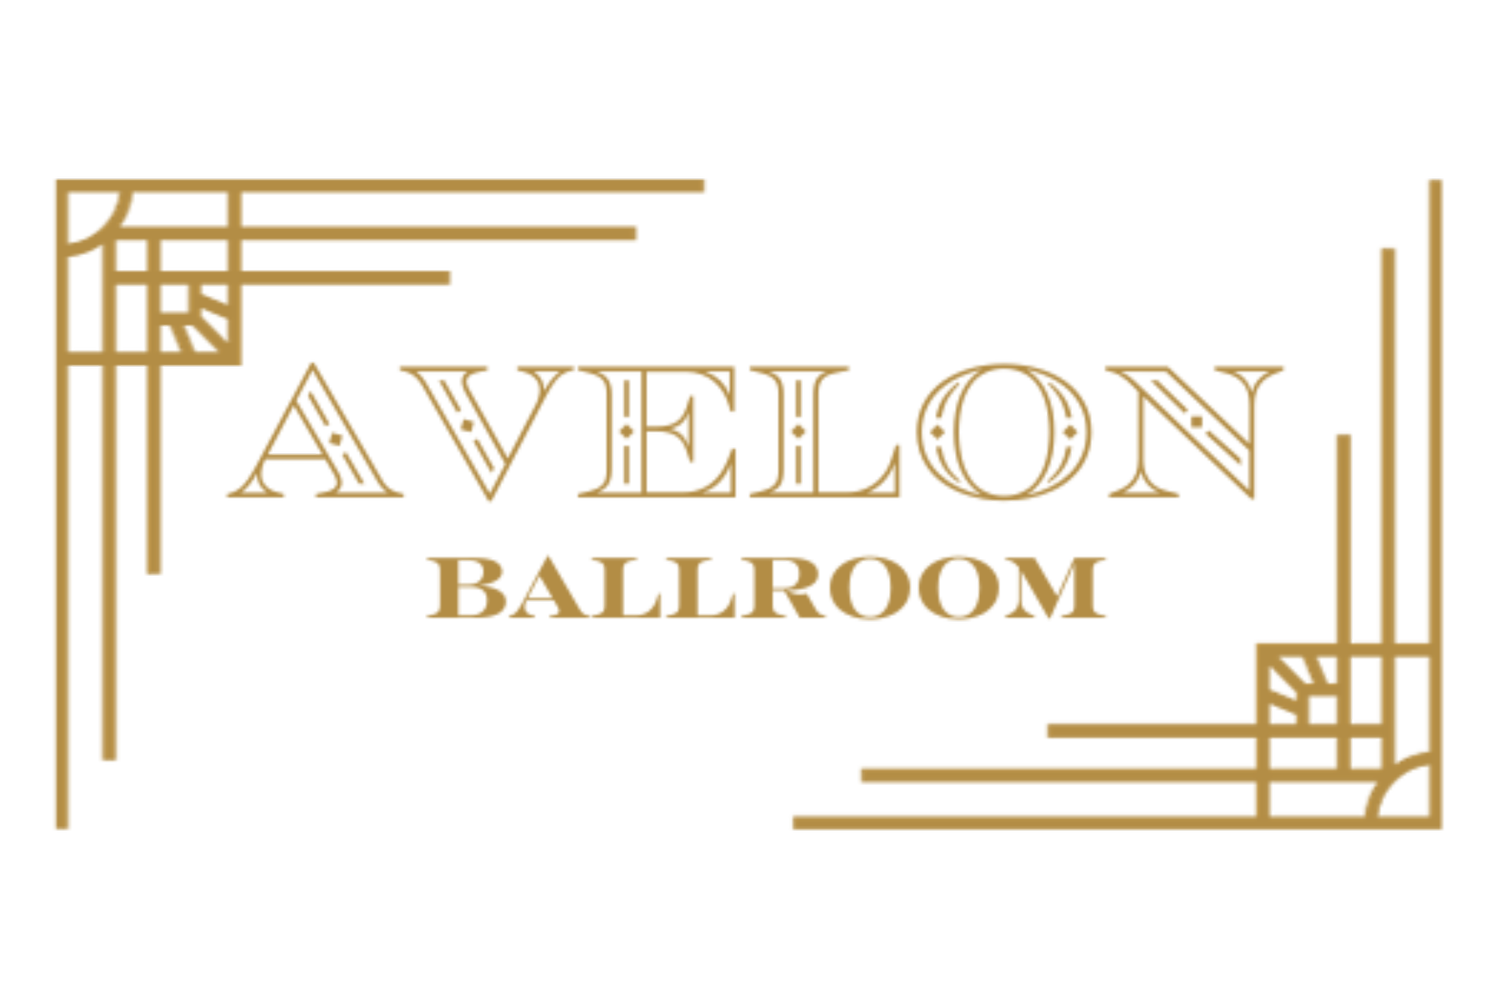 Avelon Ballroom